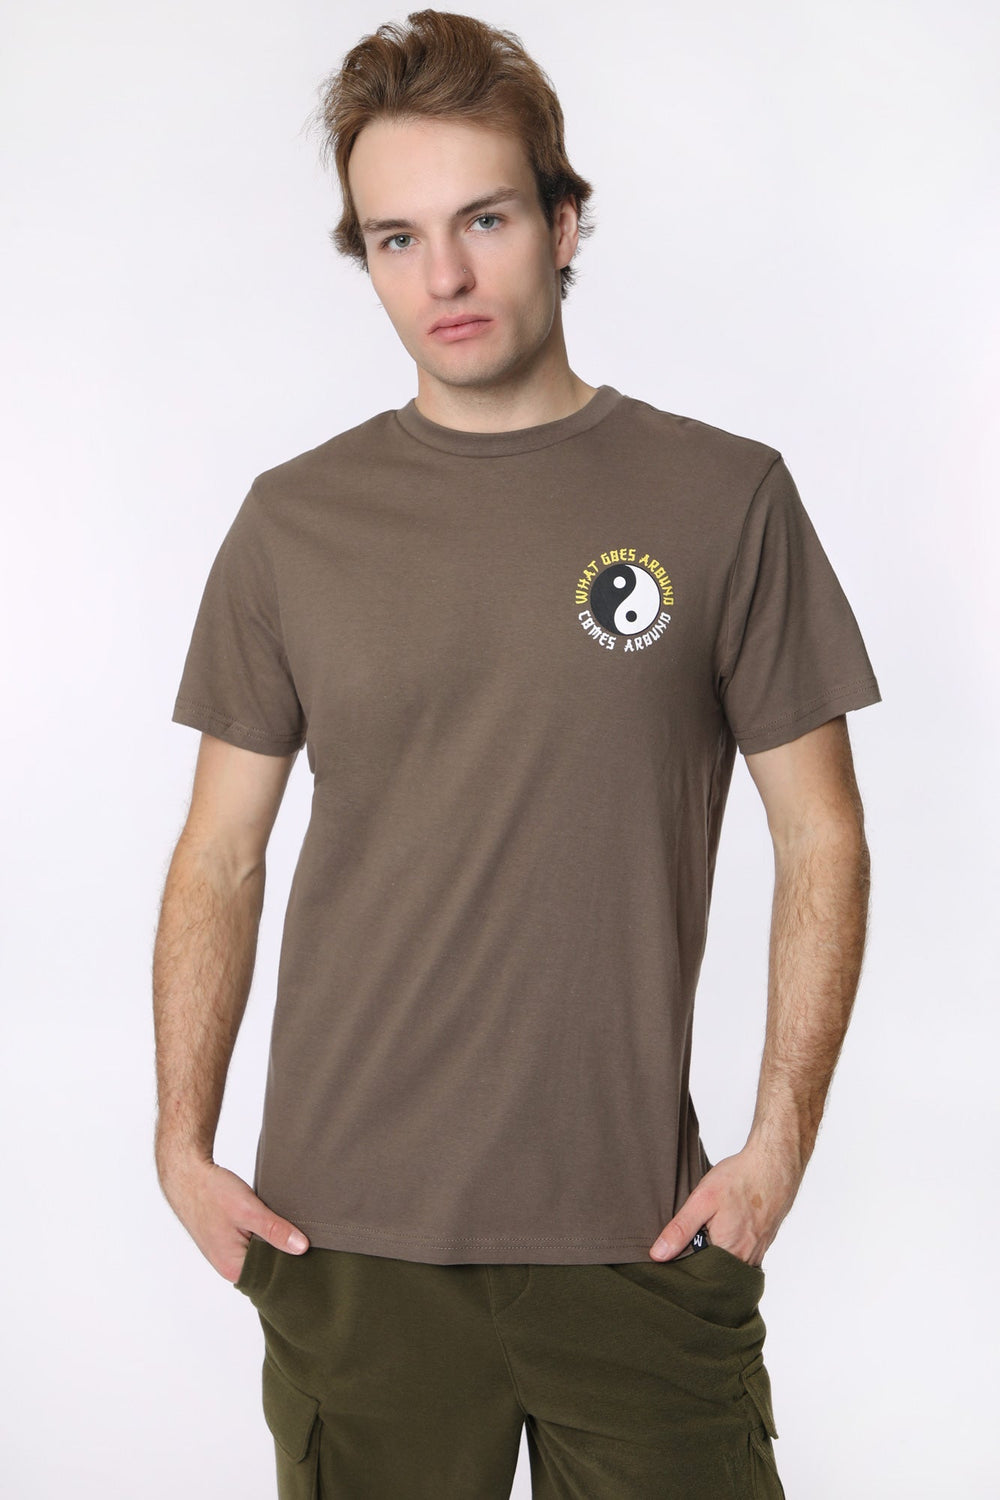 Death Valley Mens Graphic T-Shirt Death Valley Mens Graphic T-Shirt